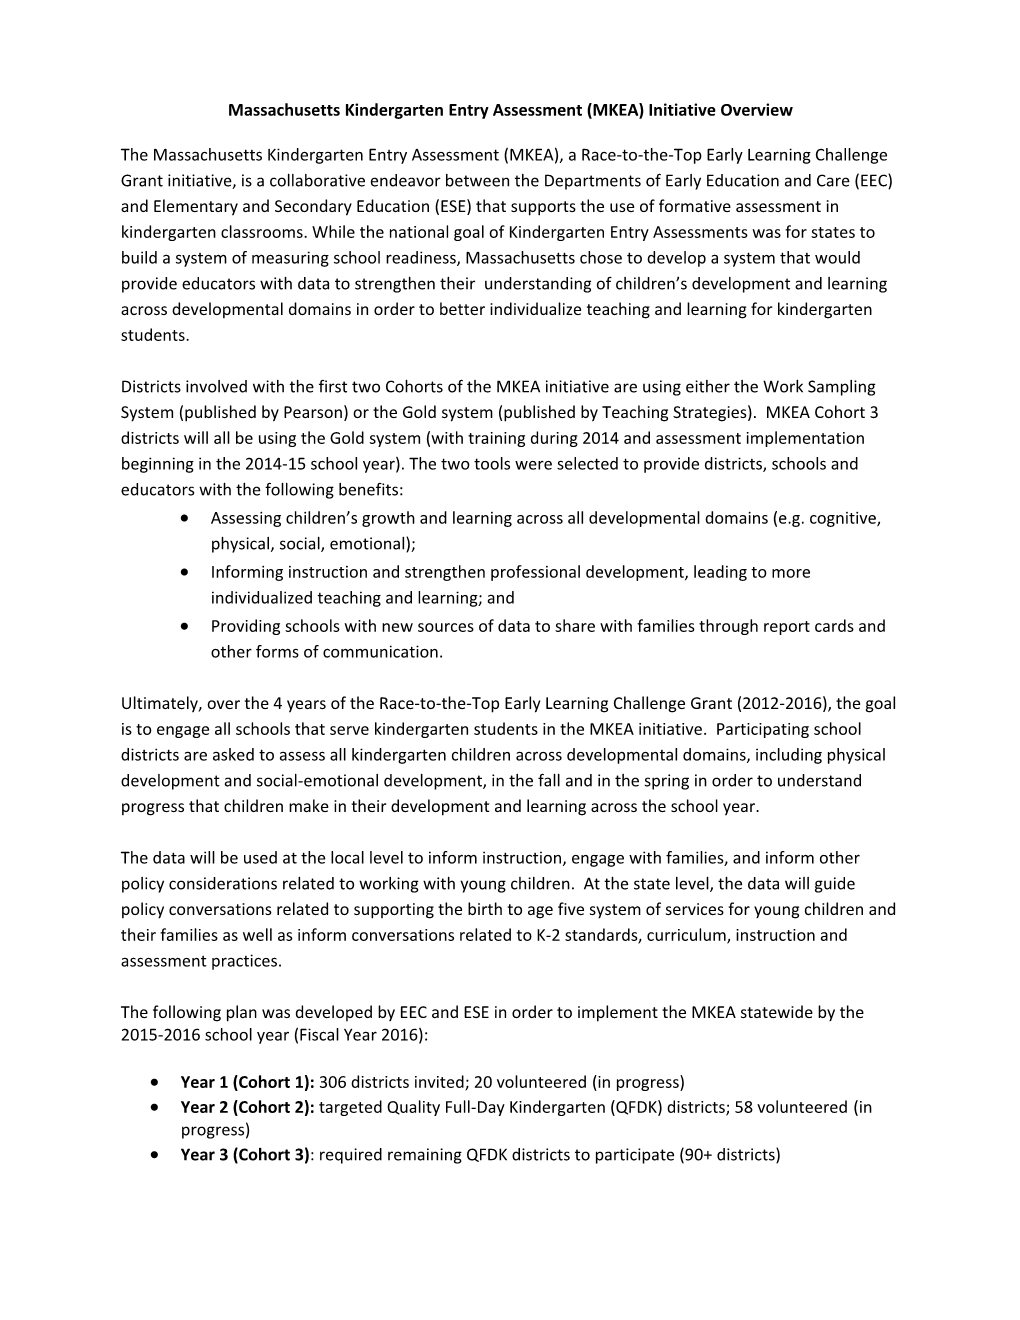 BESE Attachment, Massachusetts Kindergarten Entry Assessment (MKEA) Initiative Overview